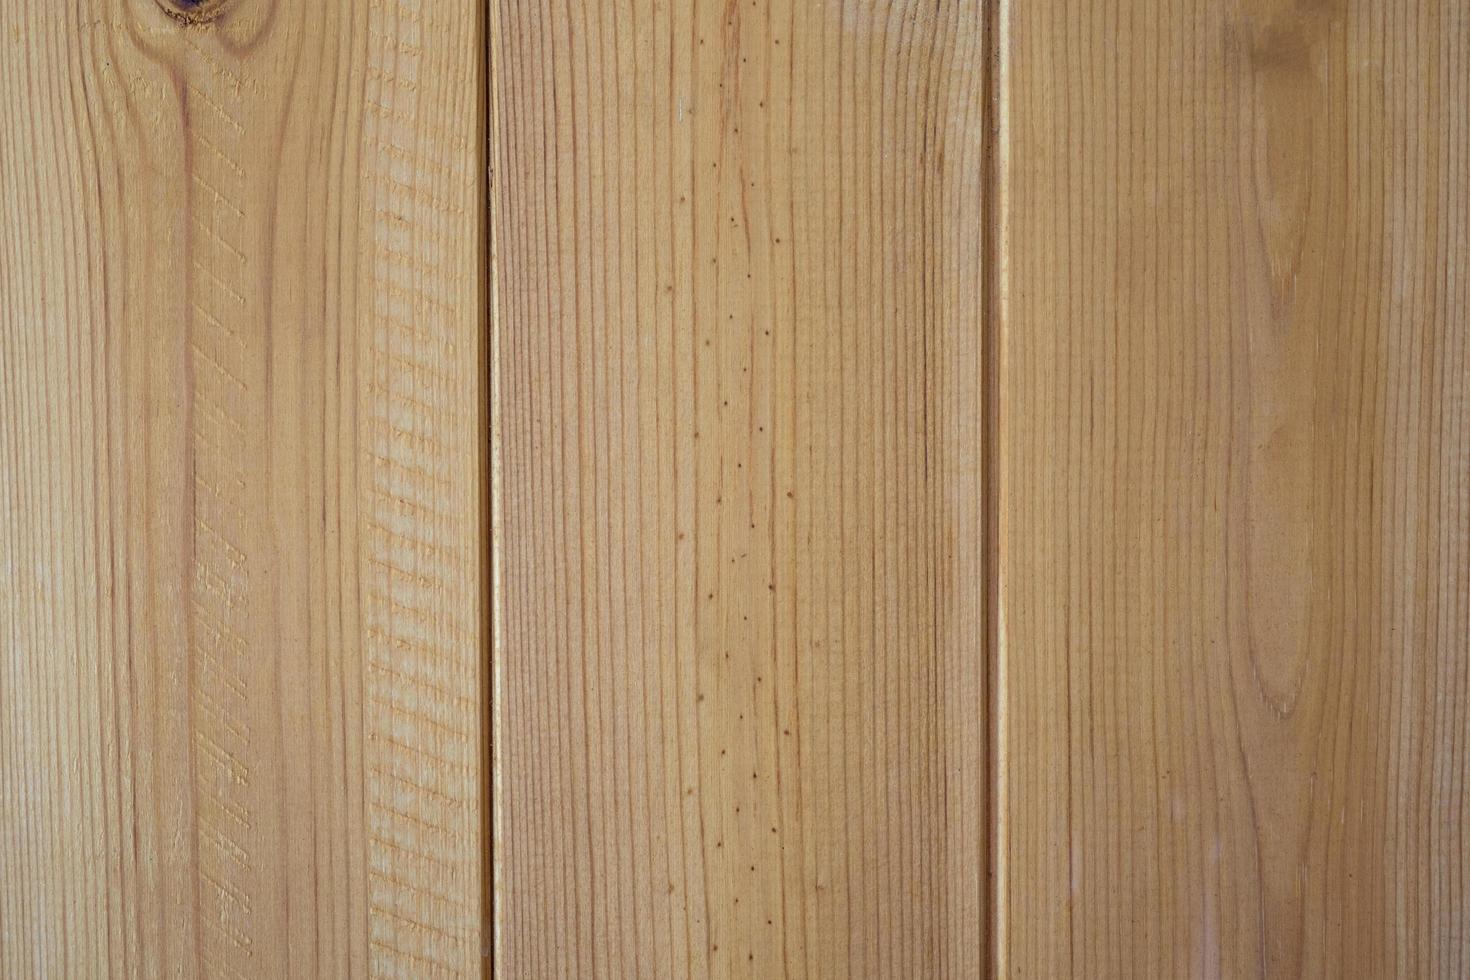 Wood plank texture background photo